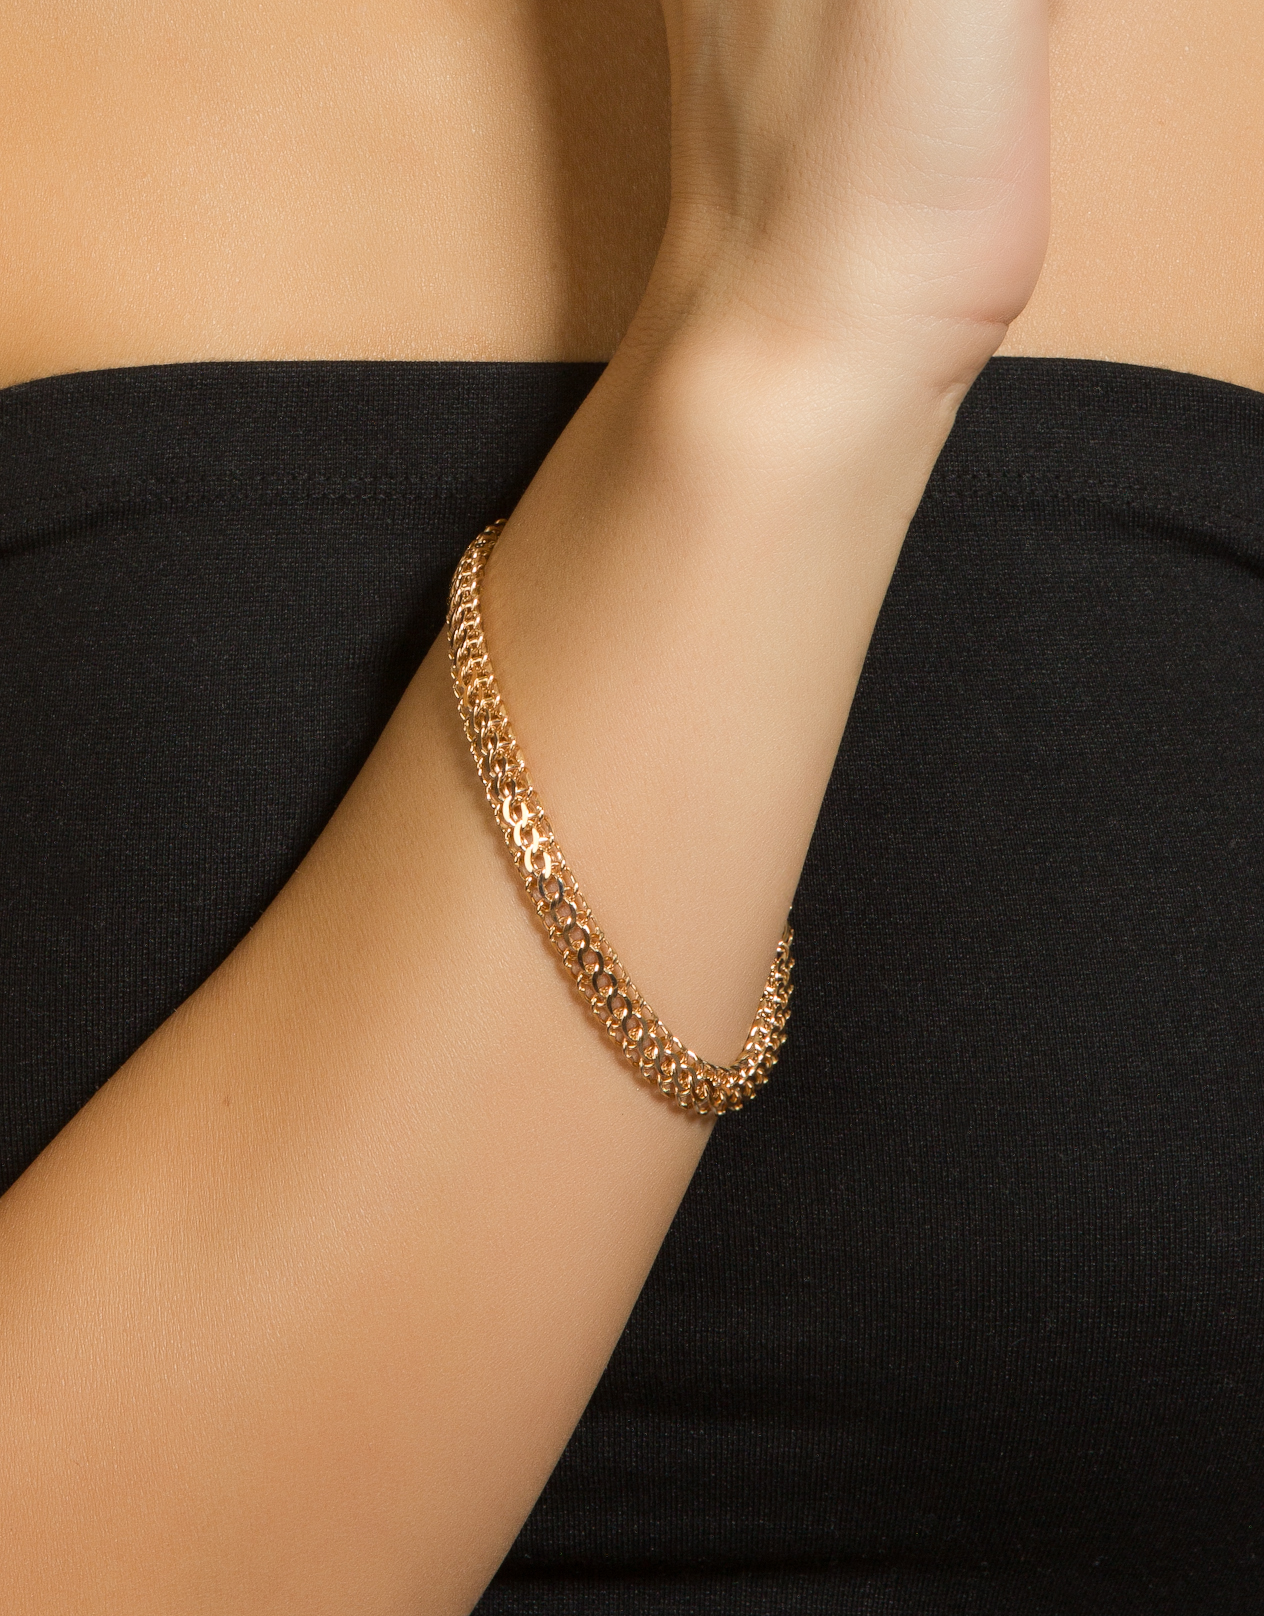 Фото браслетов из золота женские на руку фото